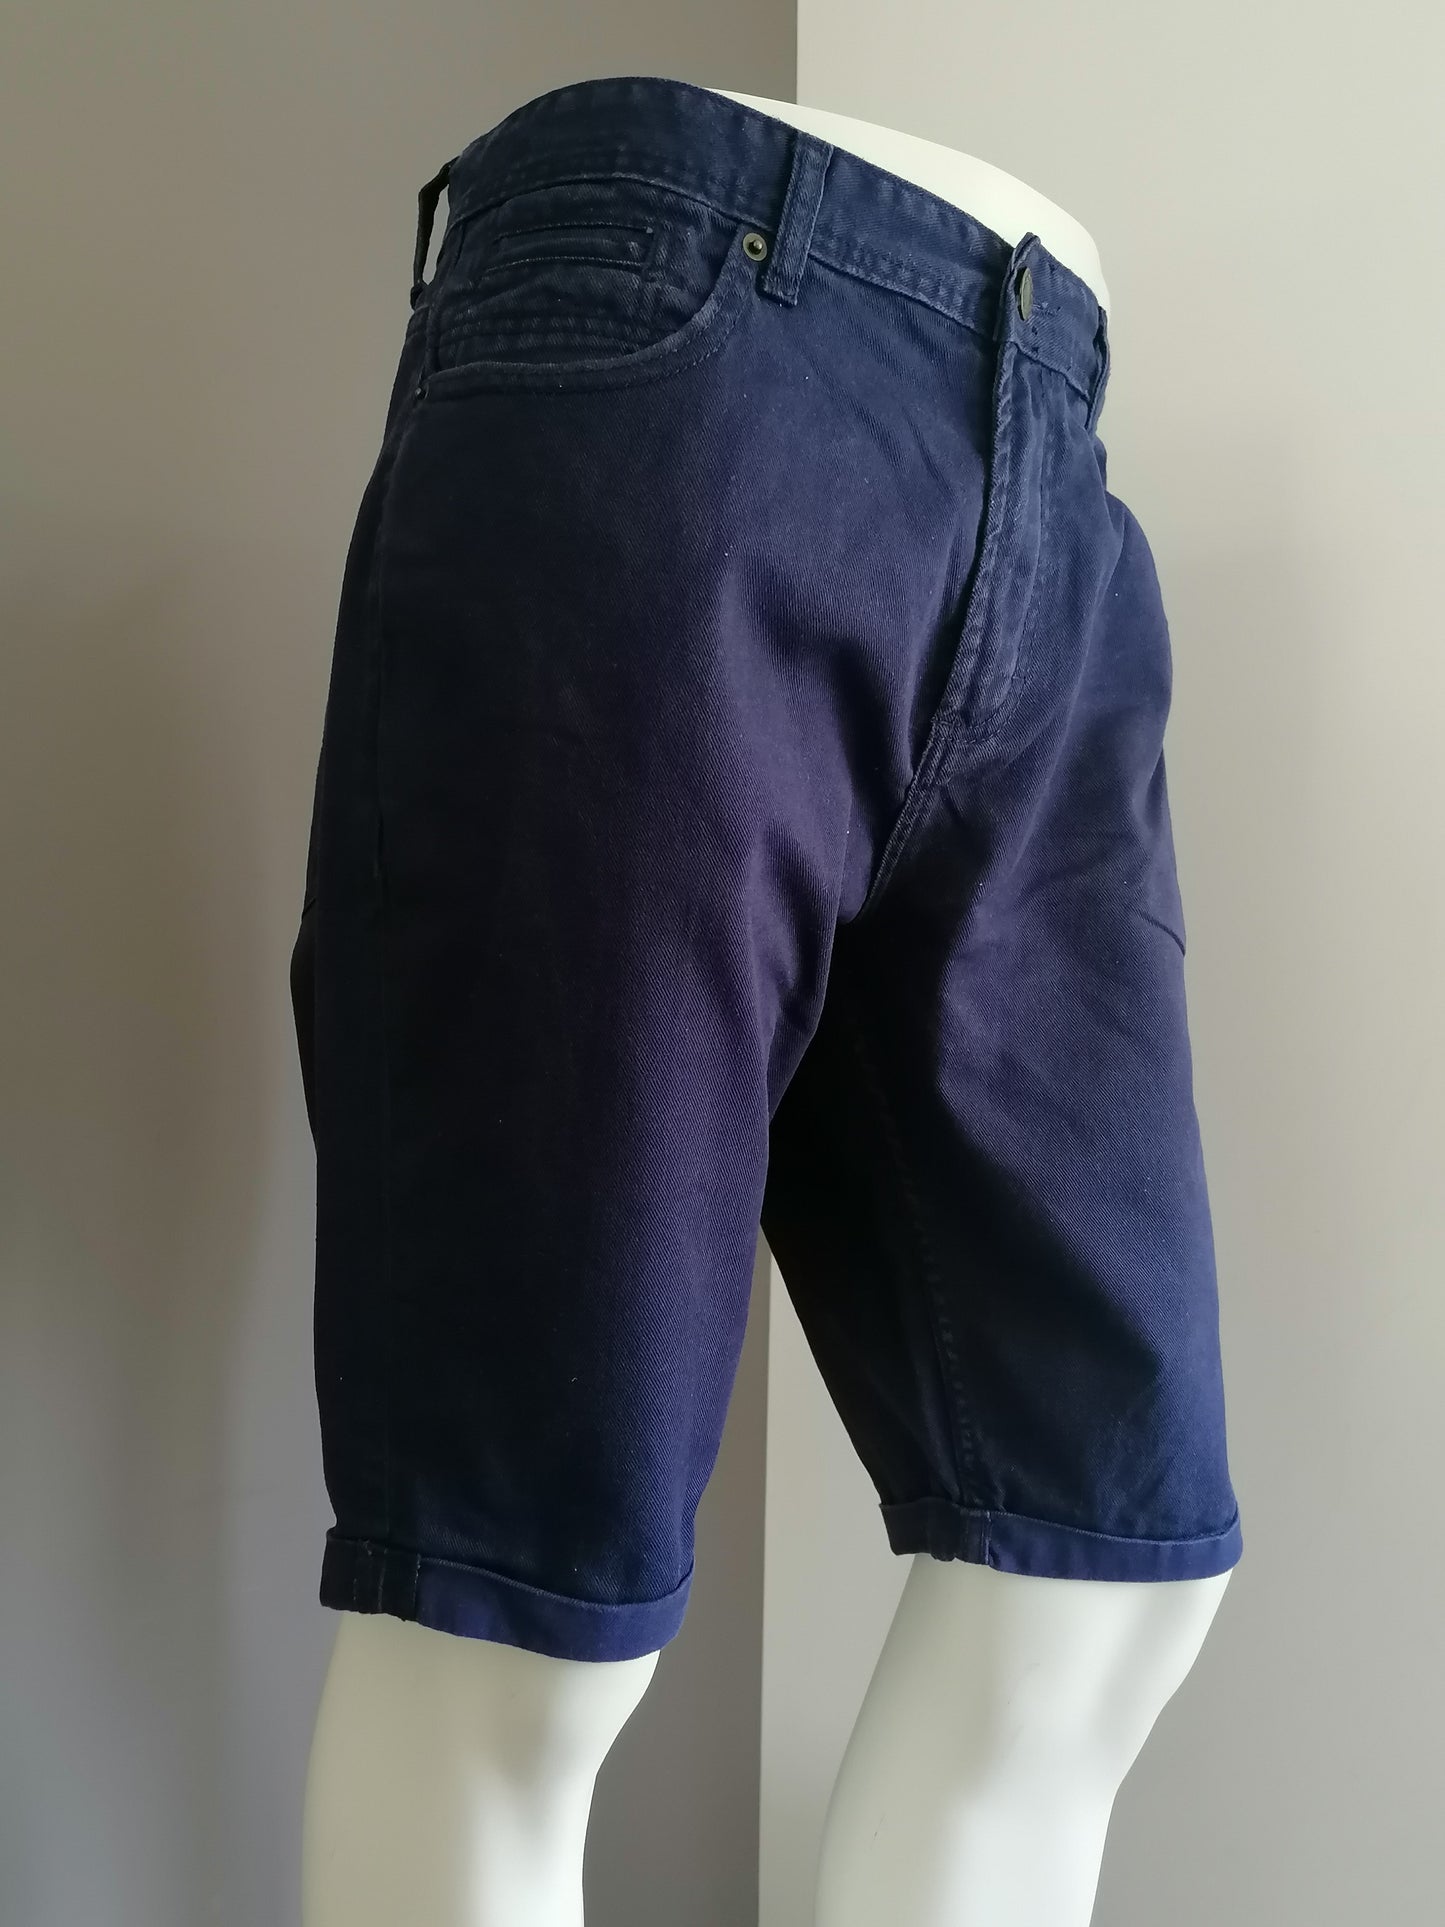 Denim Co Shorts. Dark blue colored. Size W38.